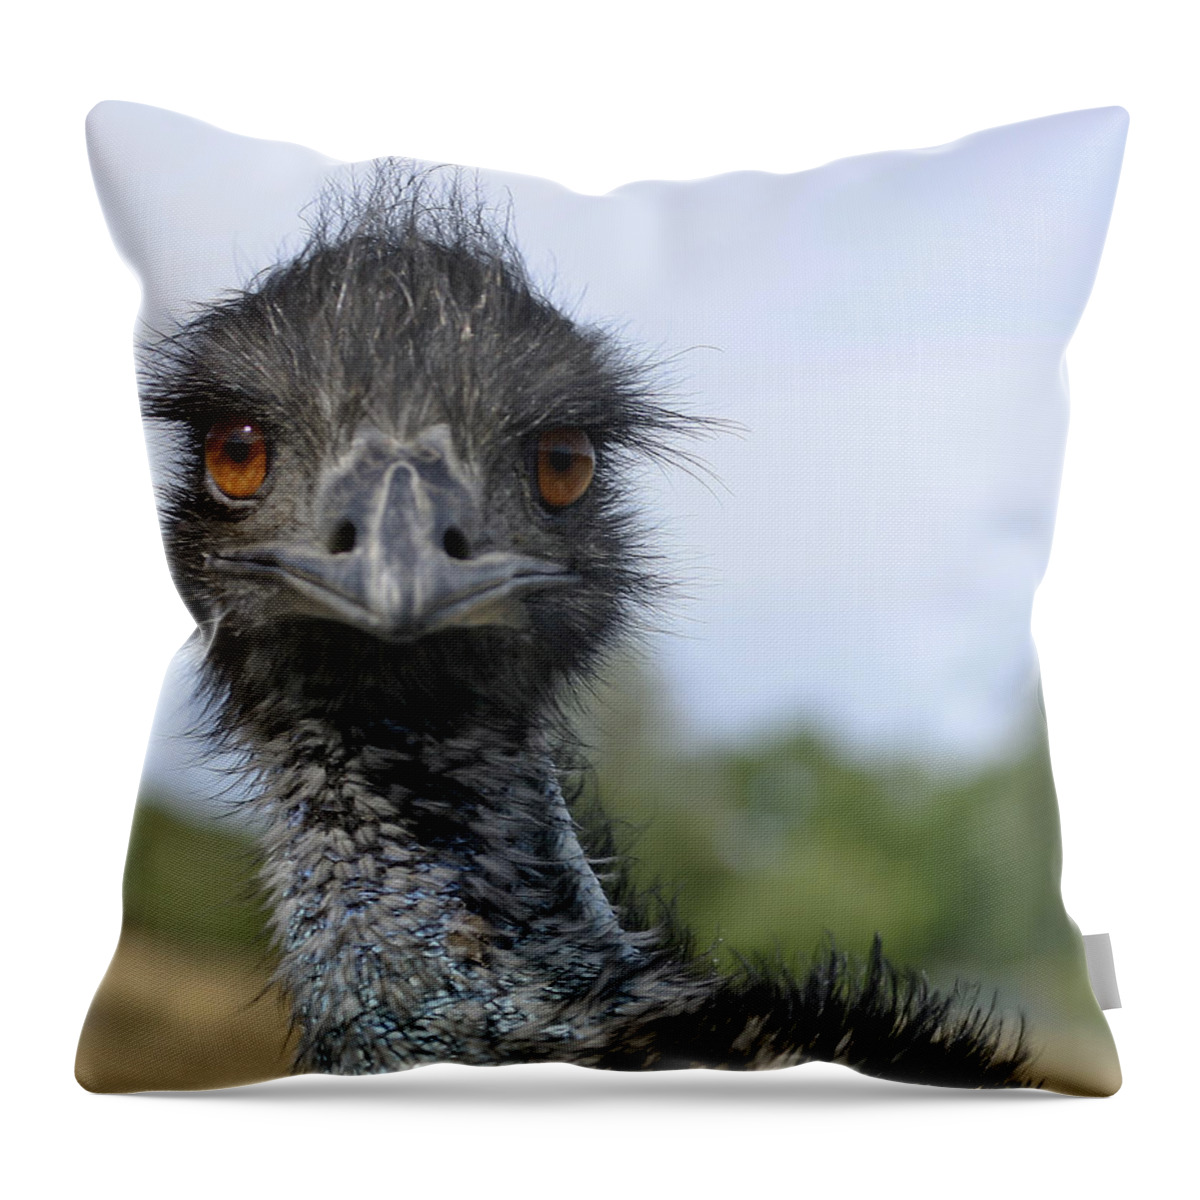 Emu Throw Pillow featuring the photograph Emu Gaze by Belinda Greb